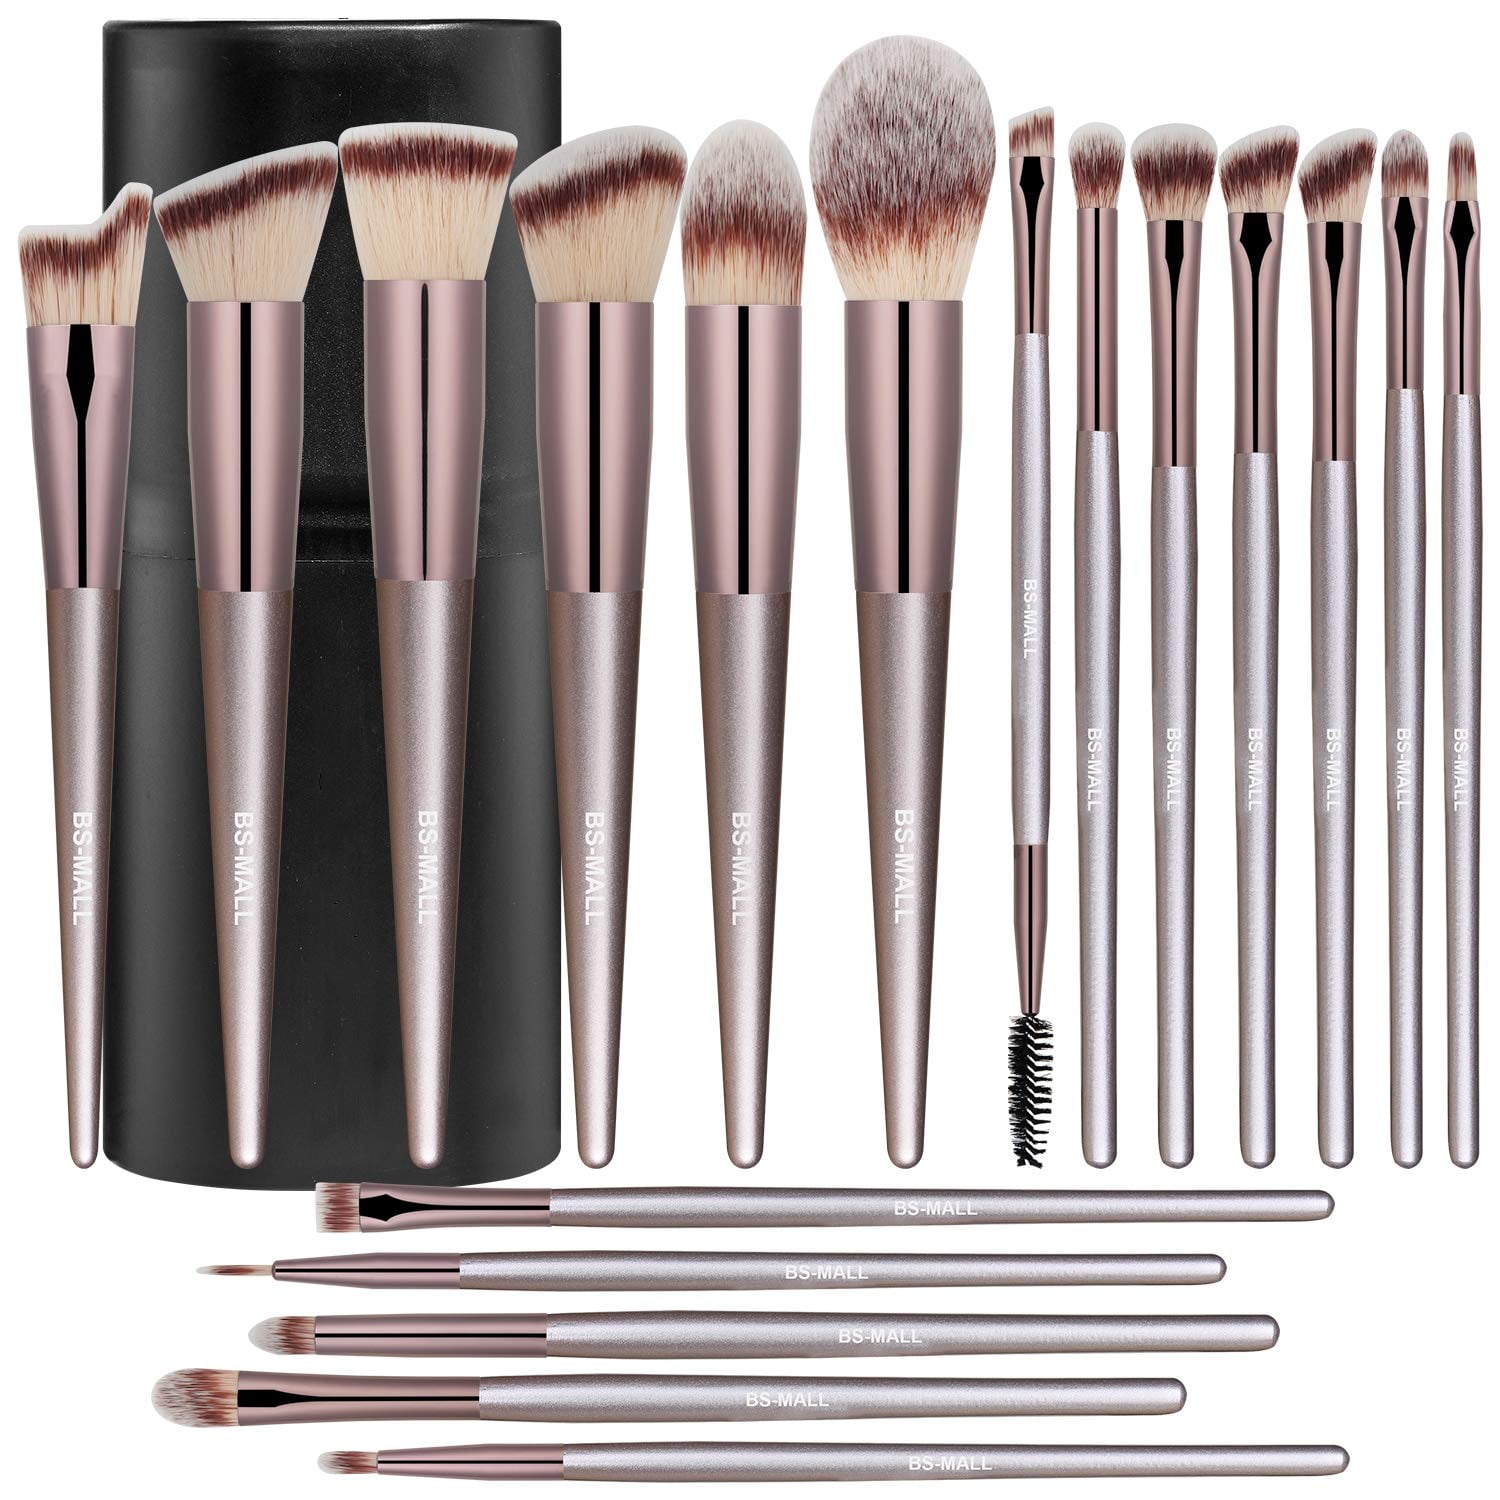 BESTOPE Premium Synthetic Foundation Brush Blending Face Powder Blush  Concealers Eye Shadows Makeup Brushes Kit, Rose Golden, 16 Pieces